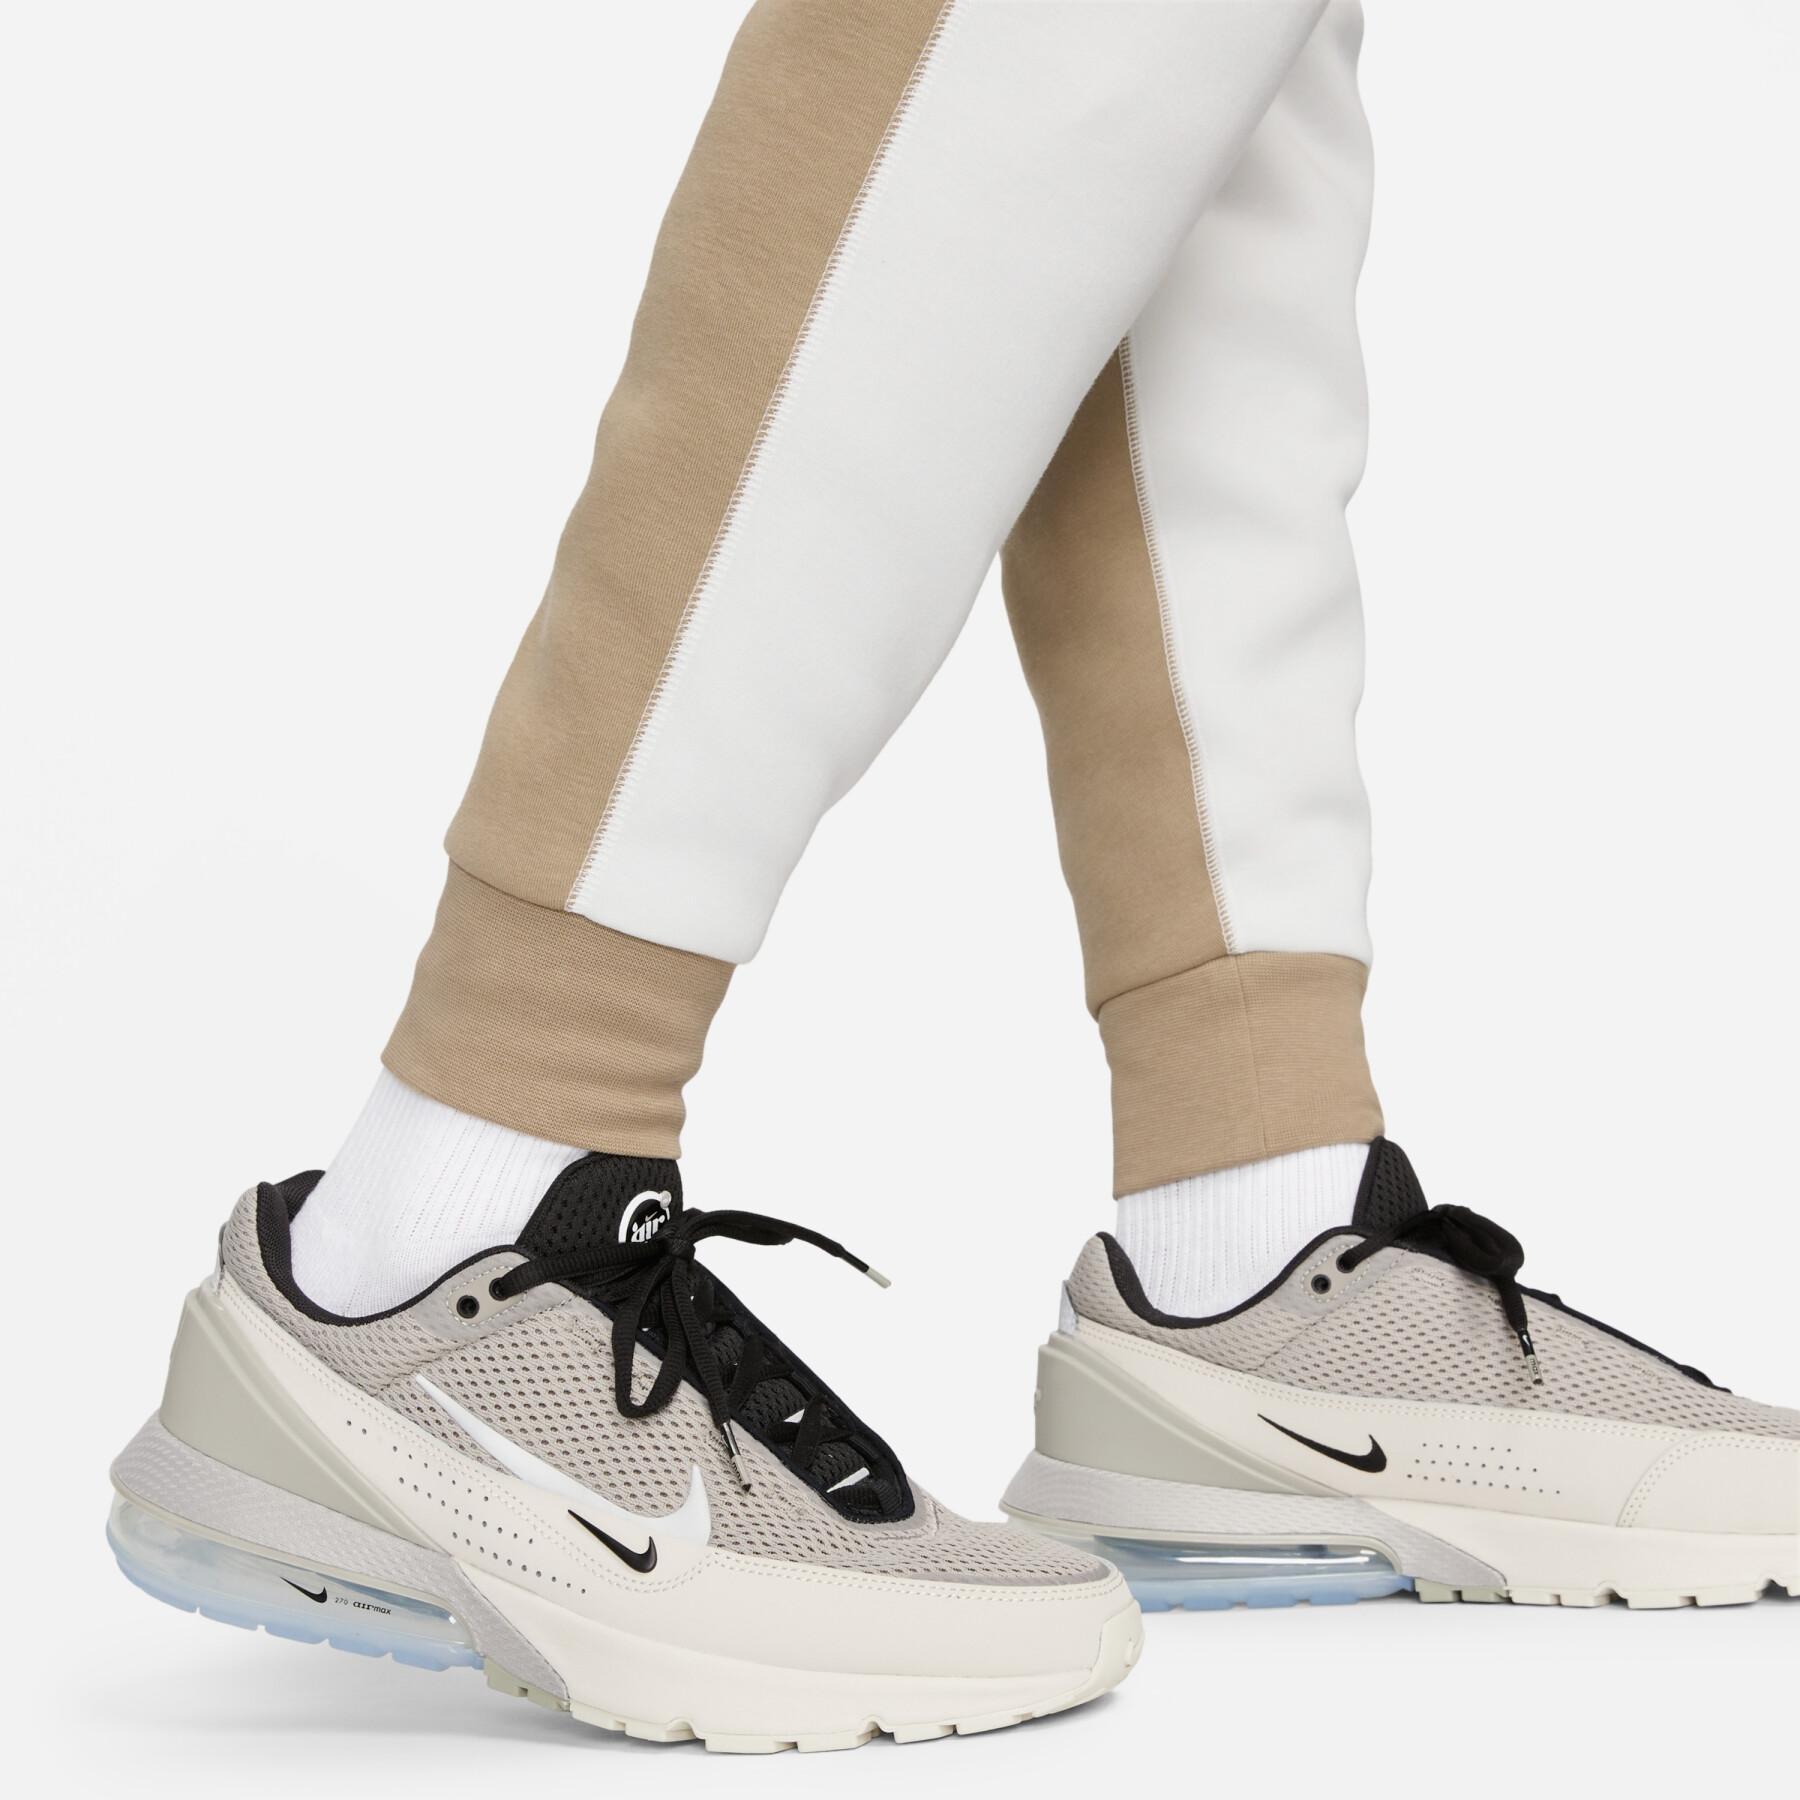 Calças de suor Nike Tech Fleece